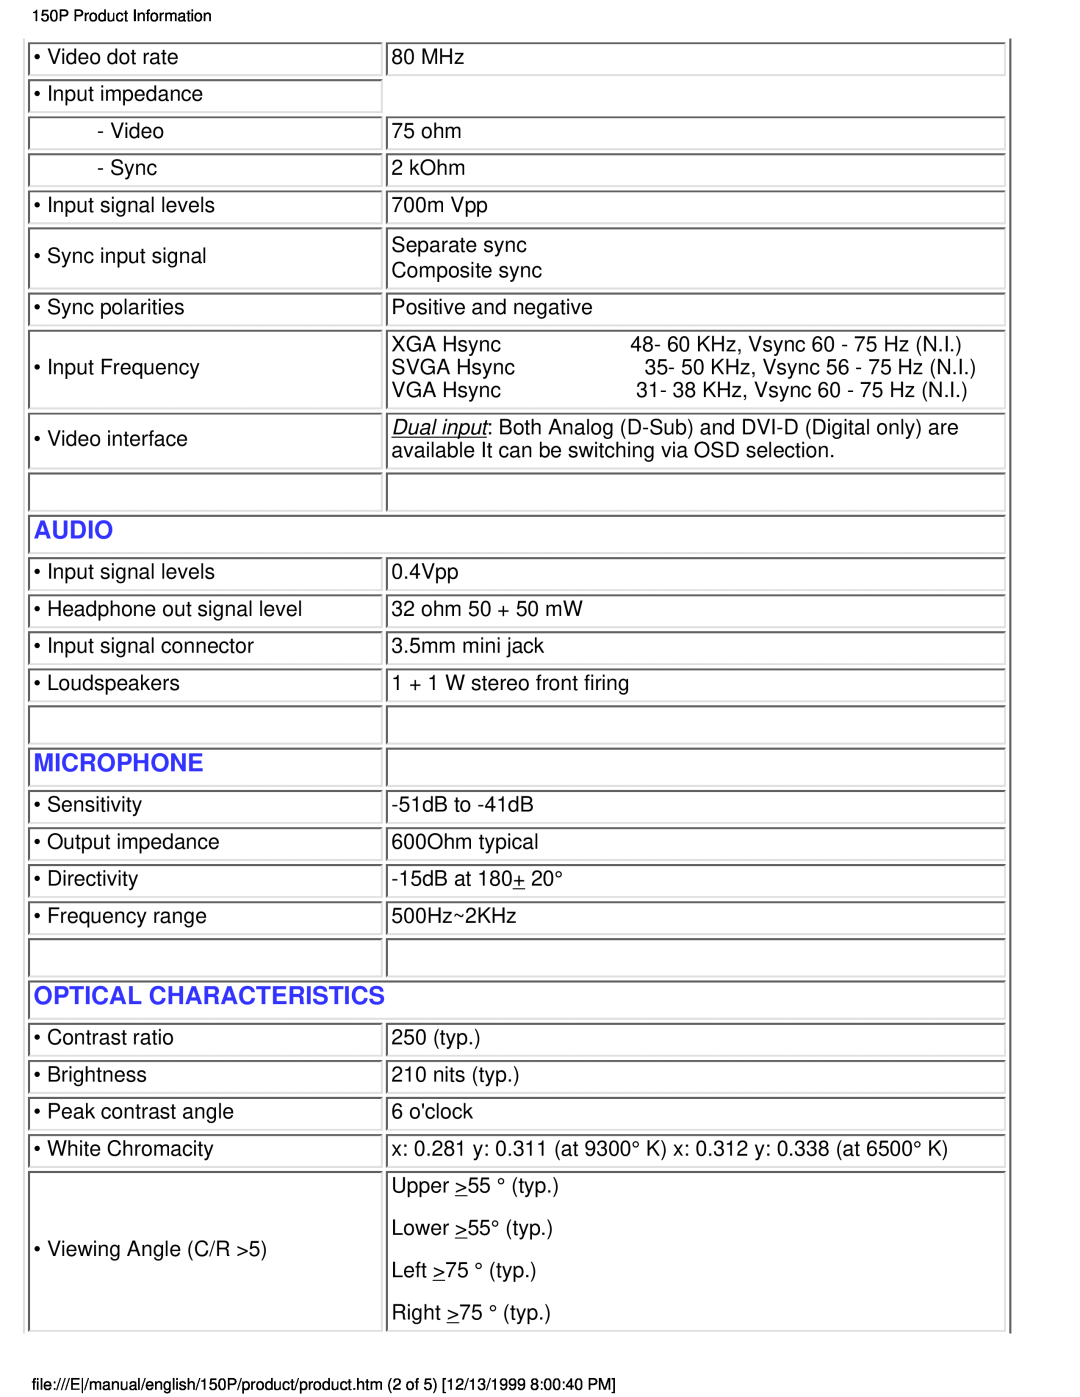 Philips 150P user manual Audio, Microphone, Optical Characteristics 